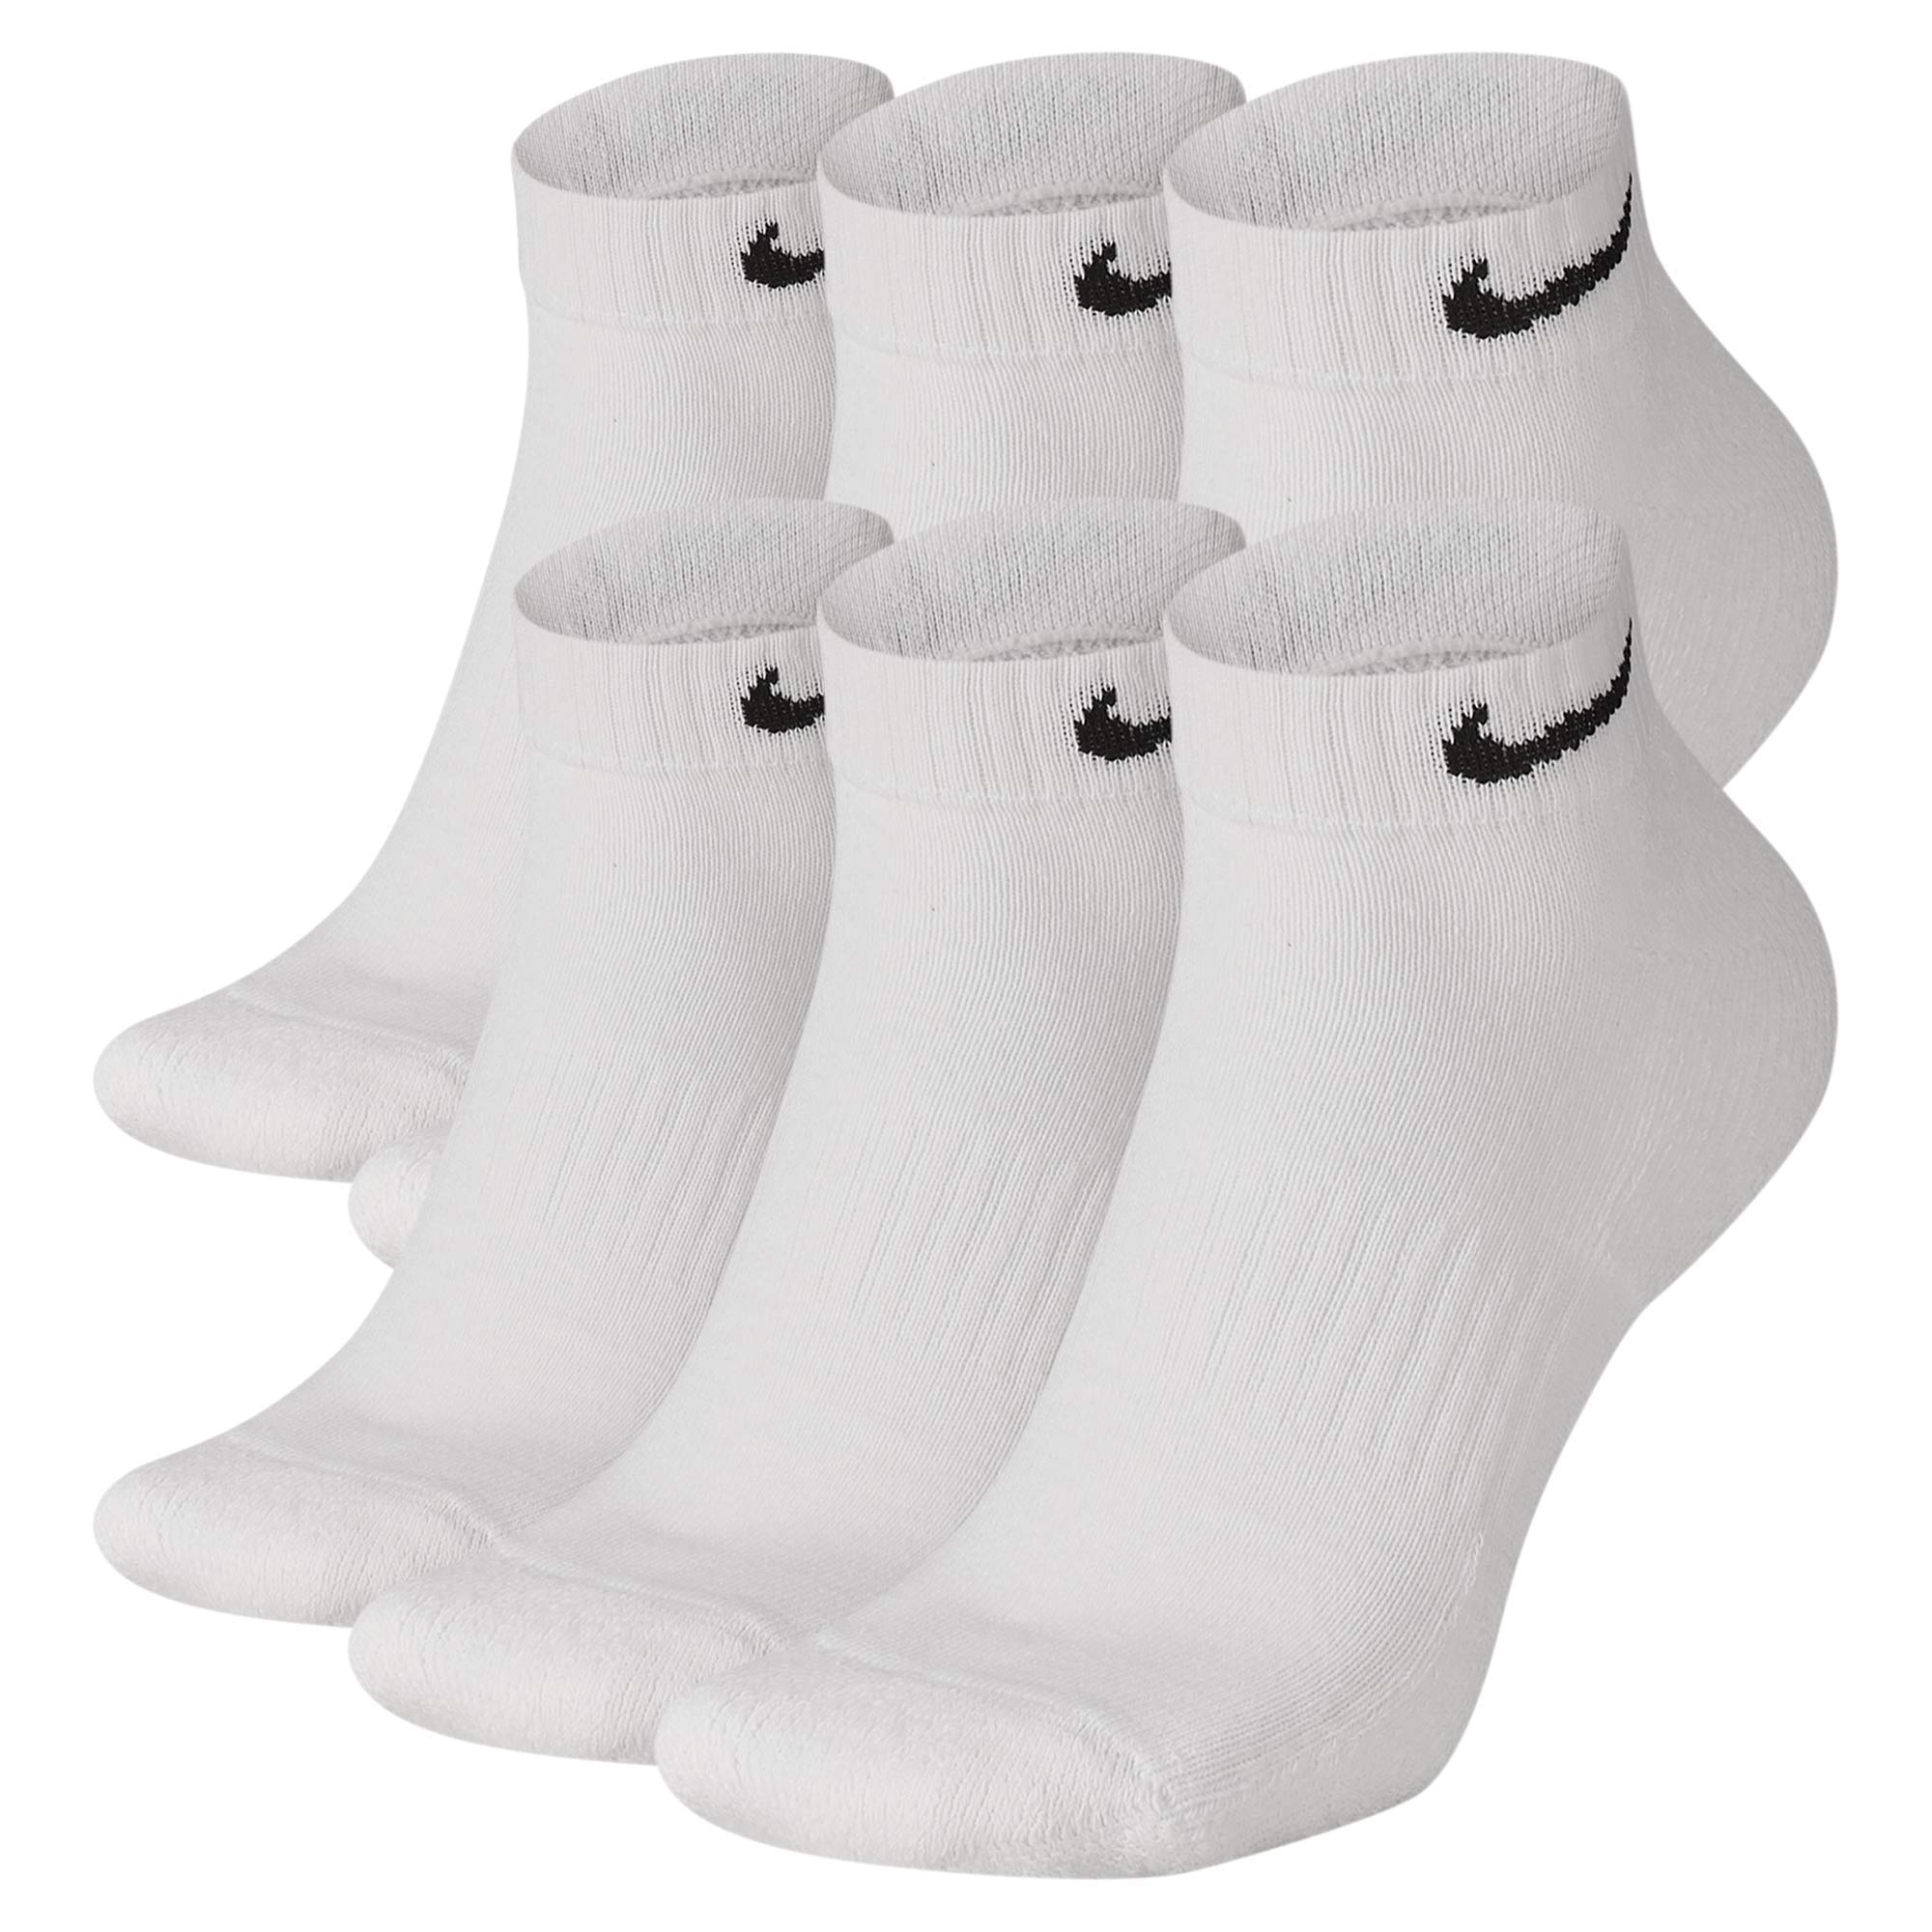 Nike Everyday Cushion Low Training Socks, Unisex Nike Socks, White/Black (6 Pair), XL